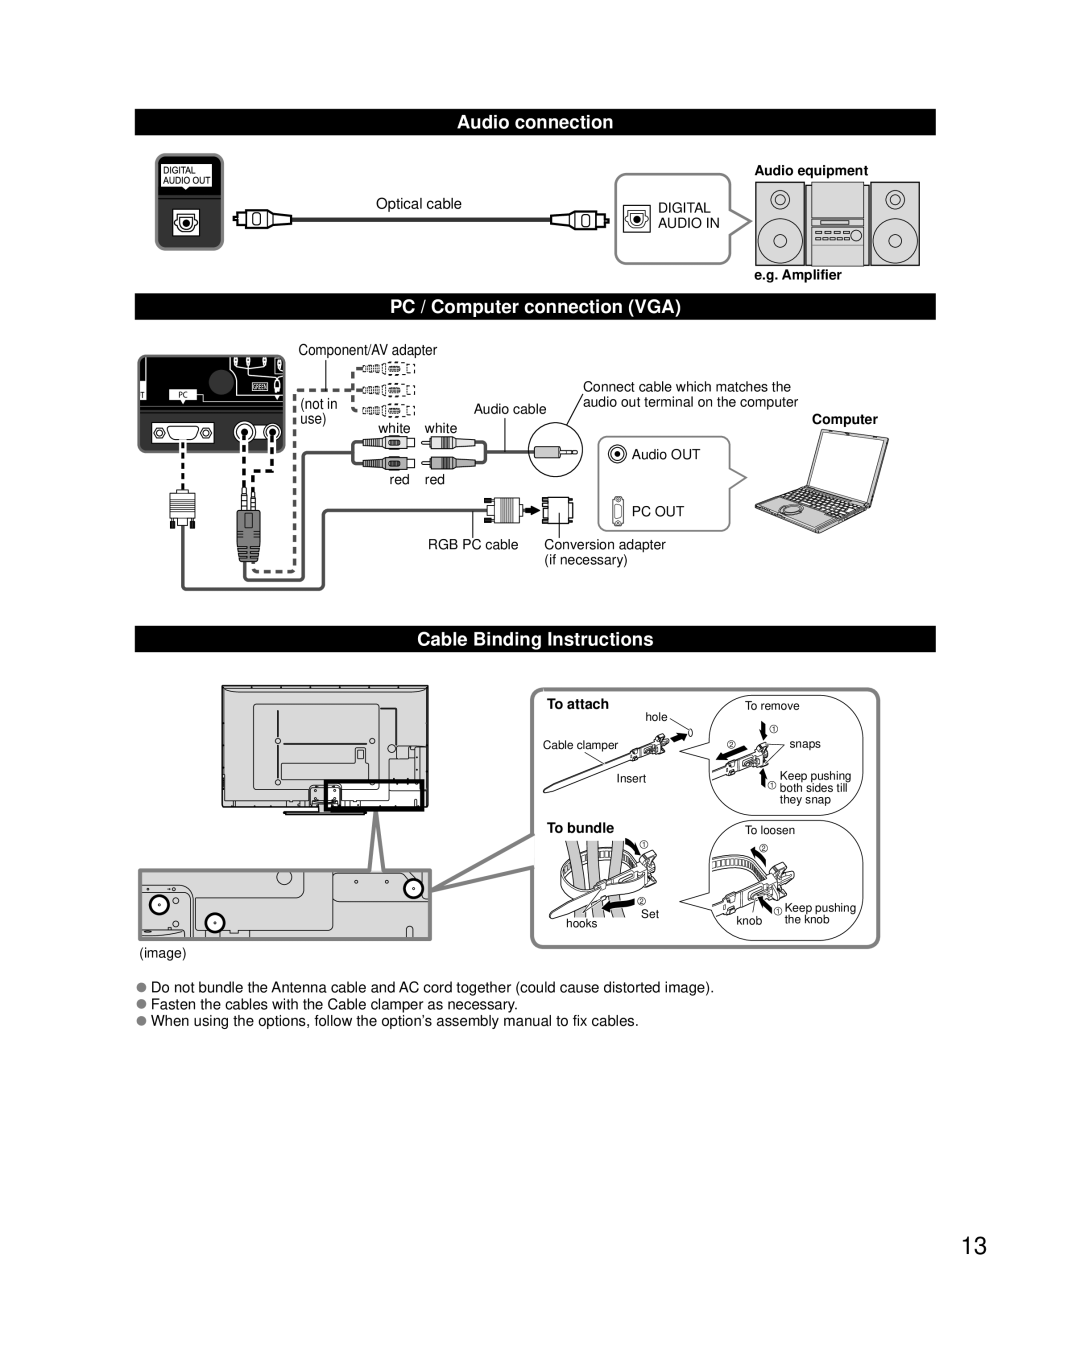 Panasonic TC-P65VT50, TC-P55VT50 owner manual Audio connection, PC / Computer connection VGA, Cable Binding Instructions 